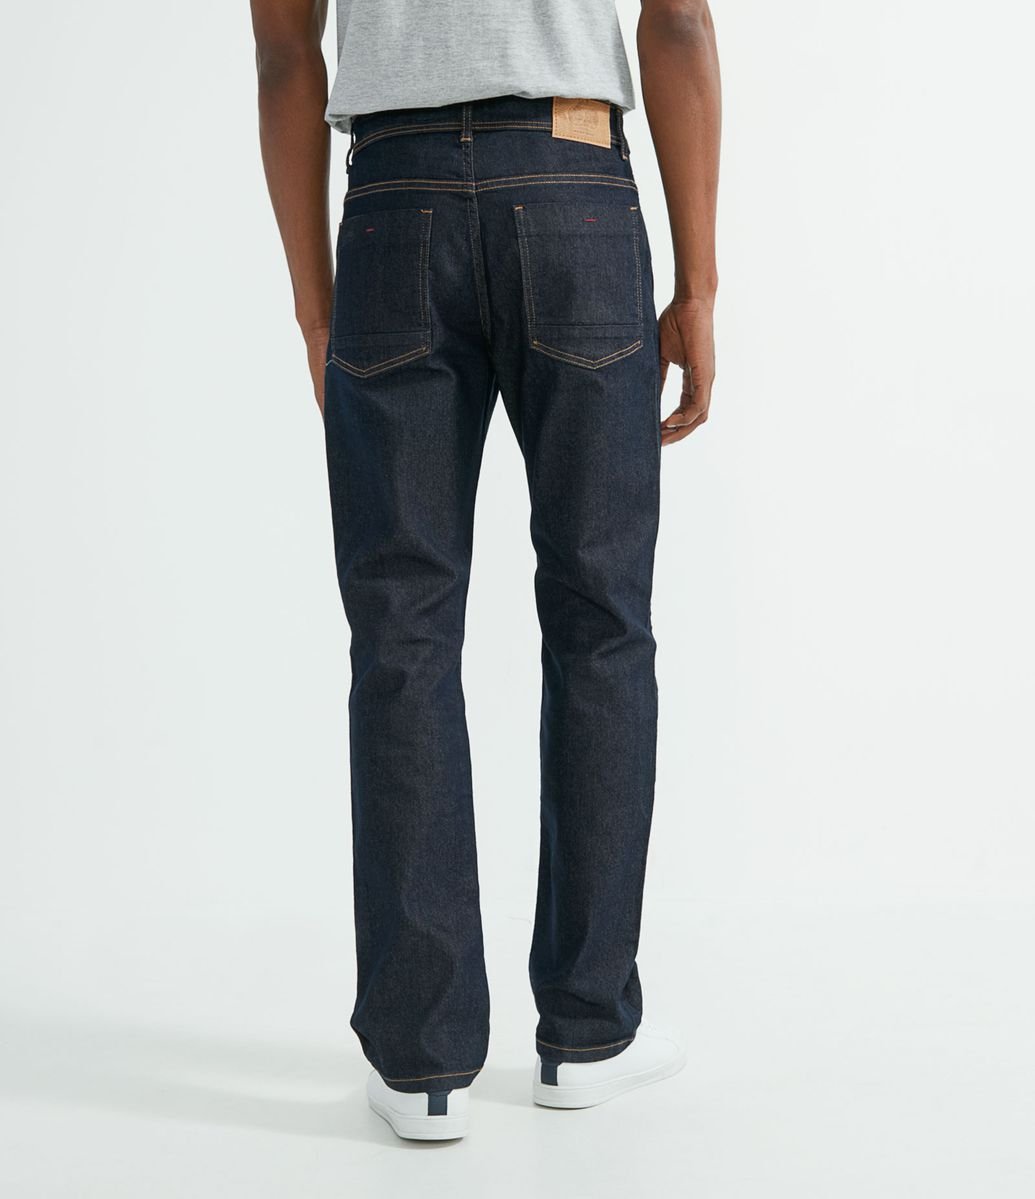 calça jeans masculina porto alegre